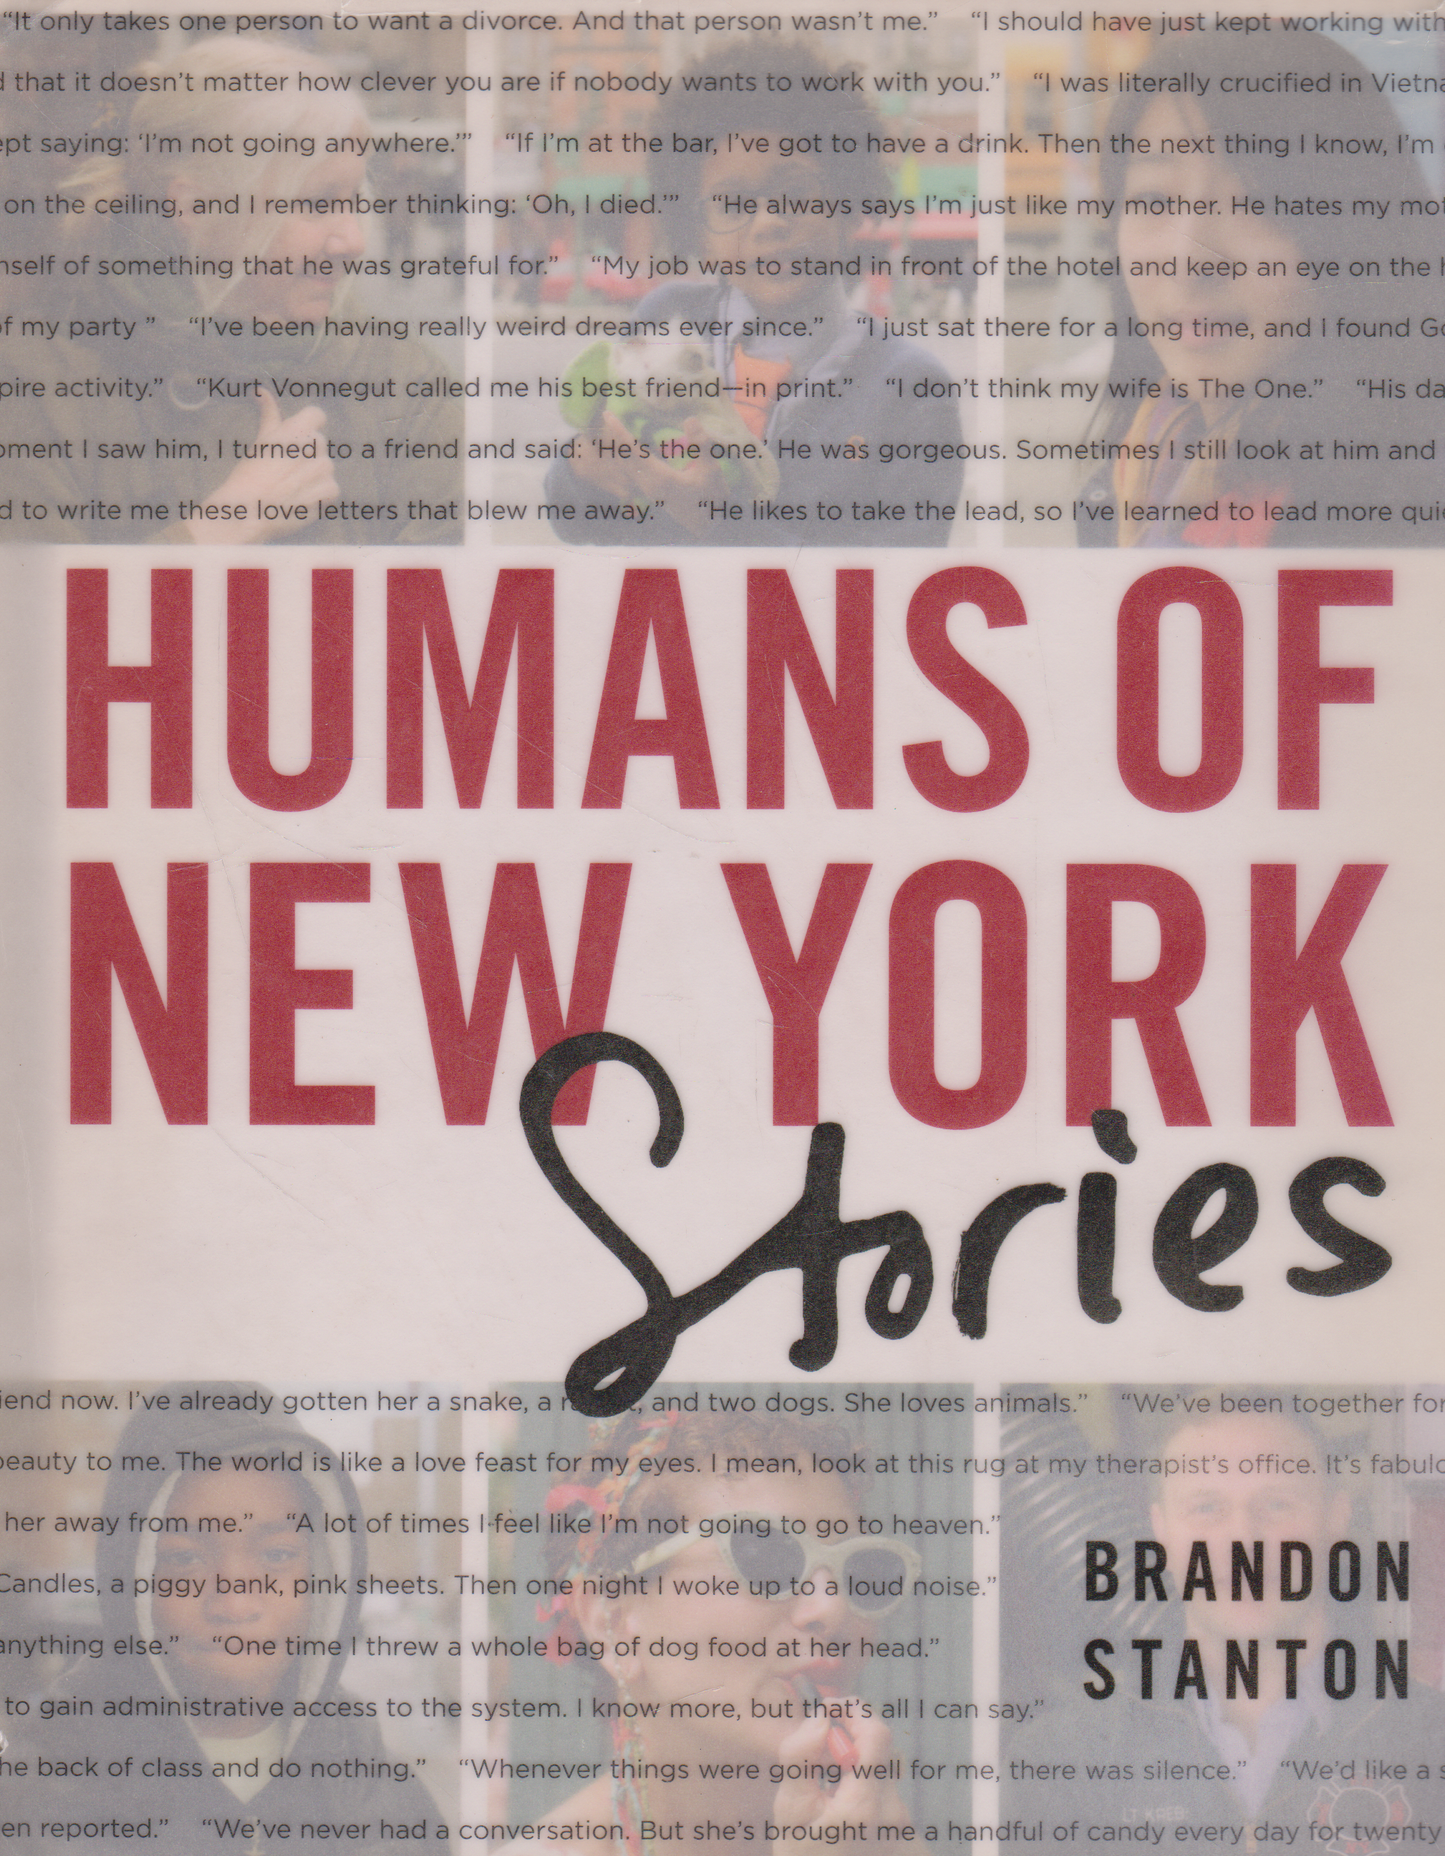 Brandon Stanton - Humans of New York: Stories